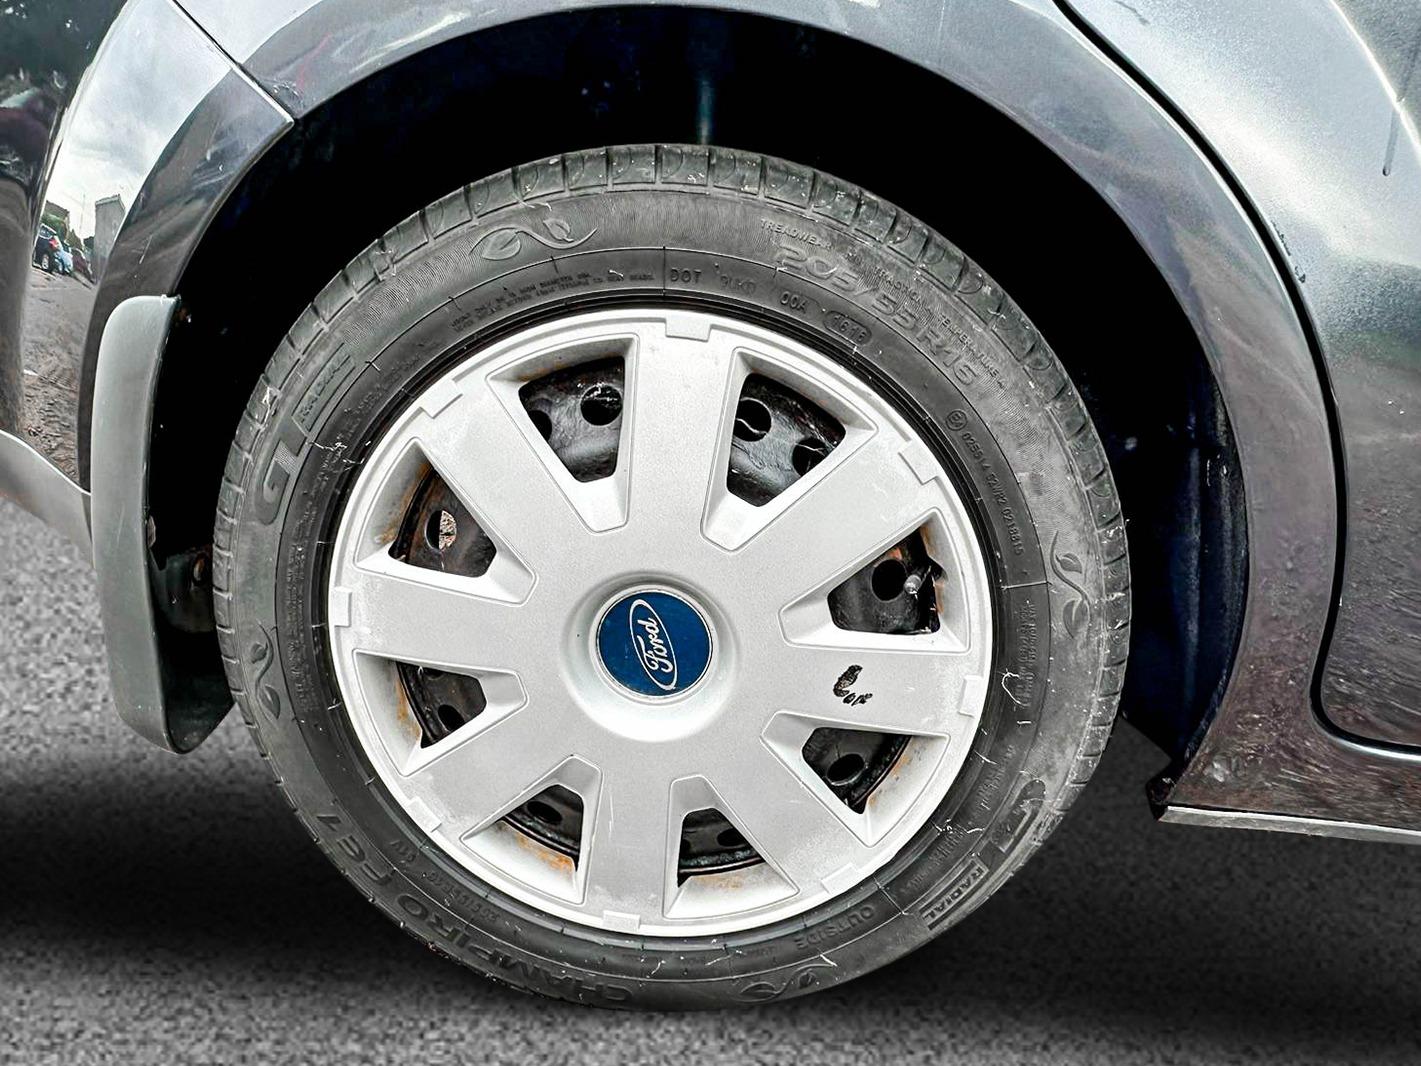 Ford Focus 1.4 LX Hatchback 5dr Petrol Manual (159 g/km, 79 bhp)